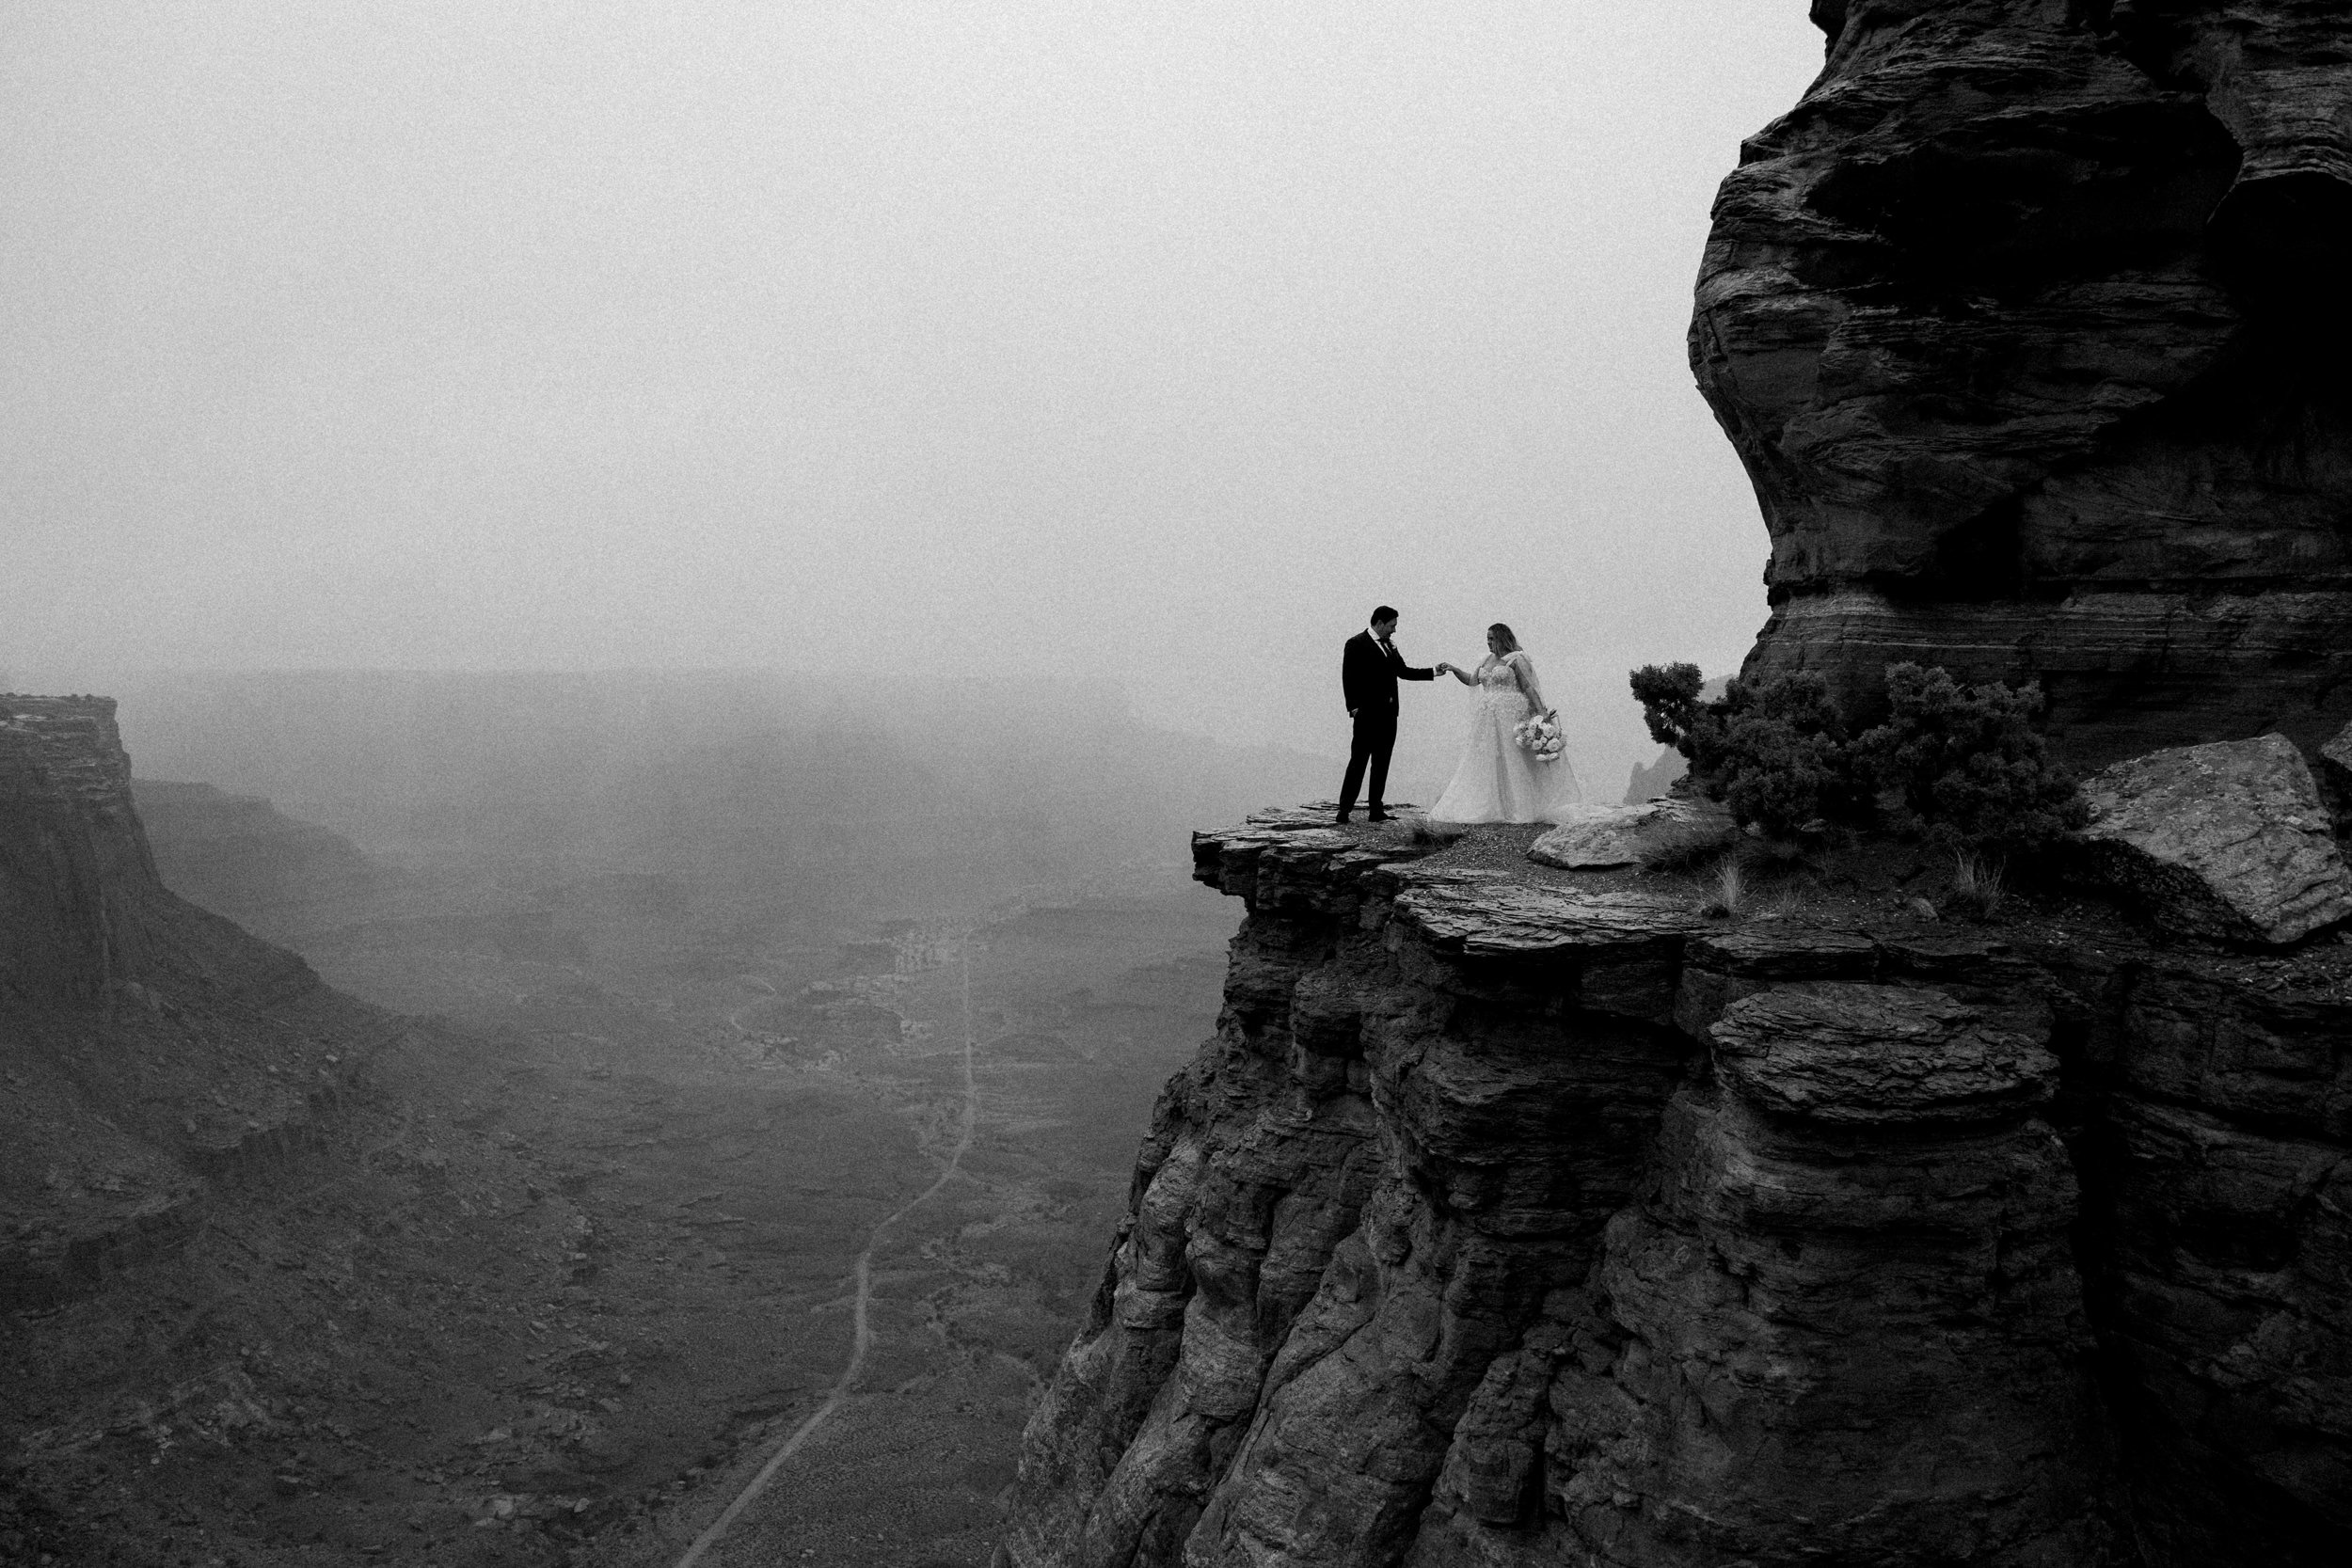 Moab, Utah Desert Elopement | The Hearnes Adventure Wedding Photography